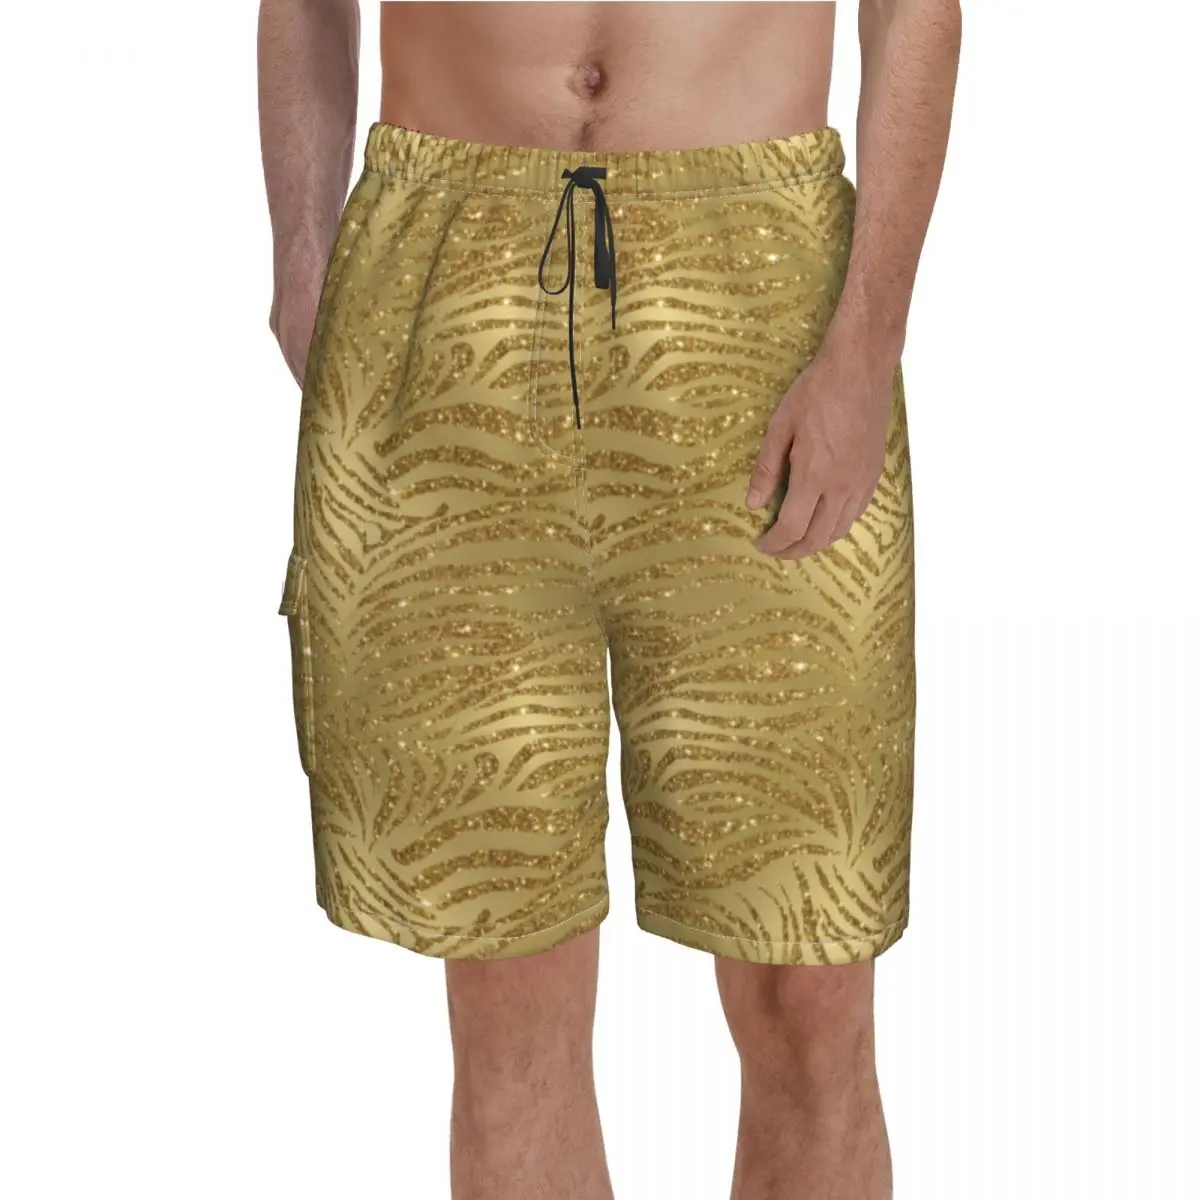 

Sparkle Tiger Print Board Shorts High Quality Gold Glitter Stripes Printed Beach Short Pants Elastic Waist Classic Swim Trunks